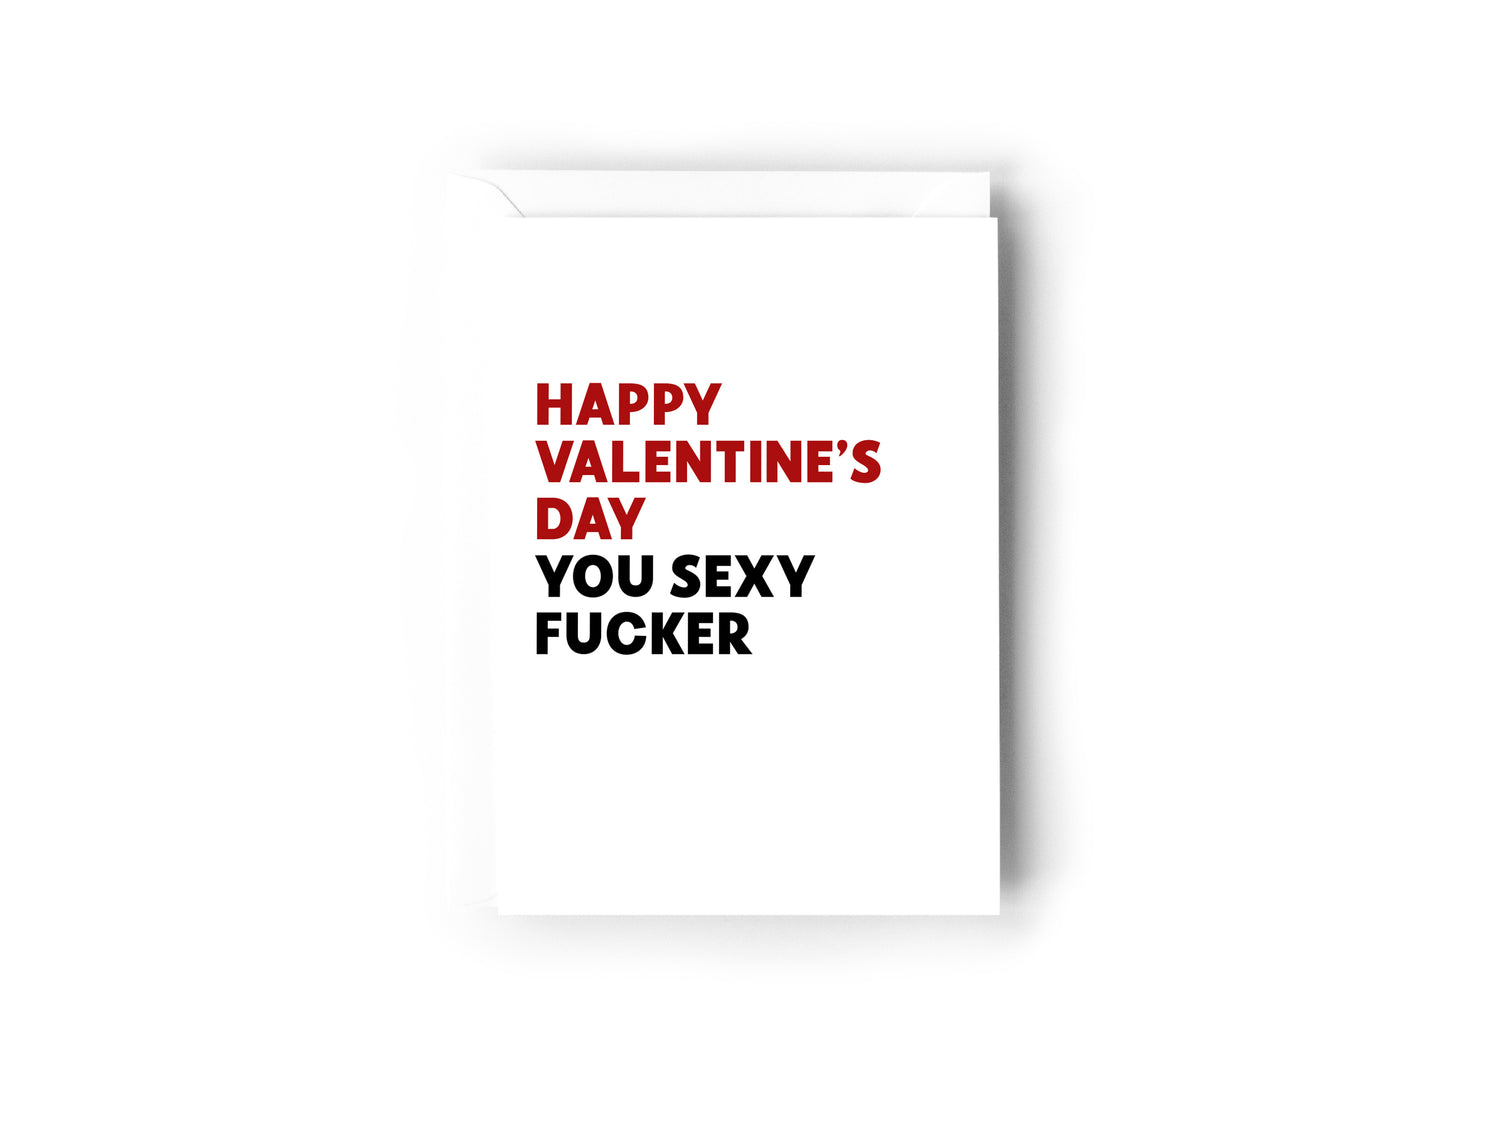 Happy Valentines Day you sexy fucker